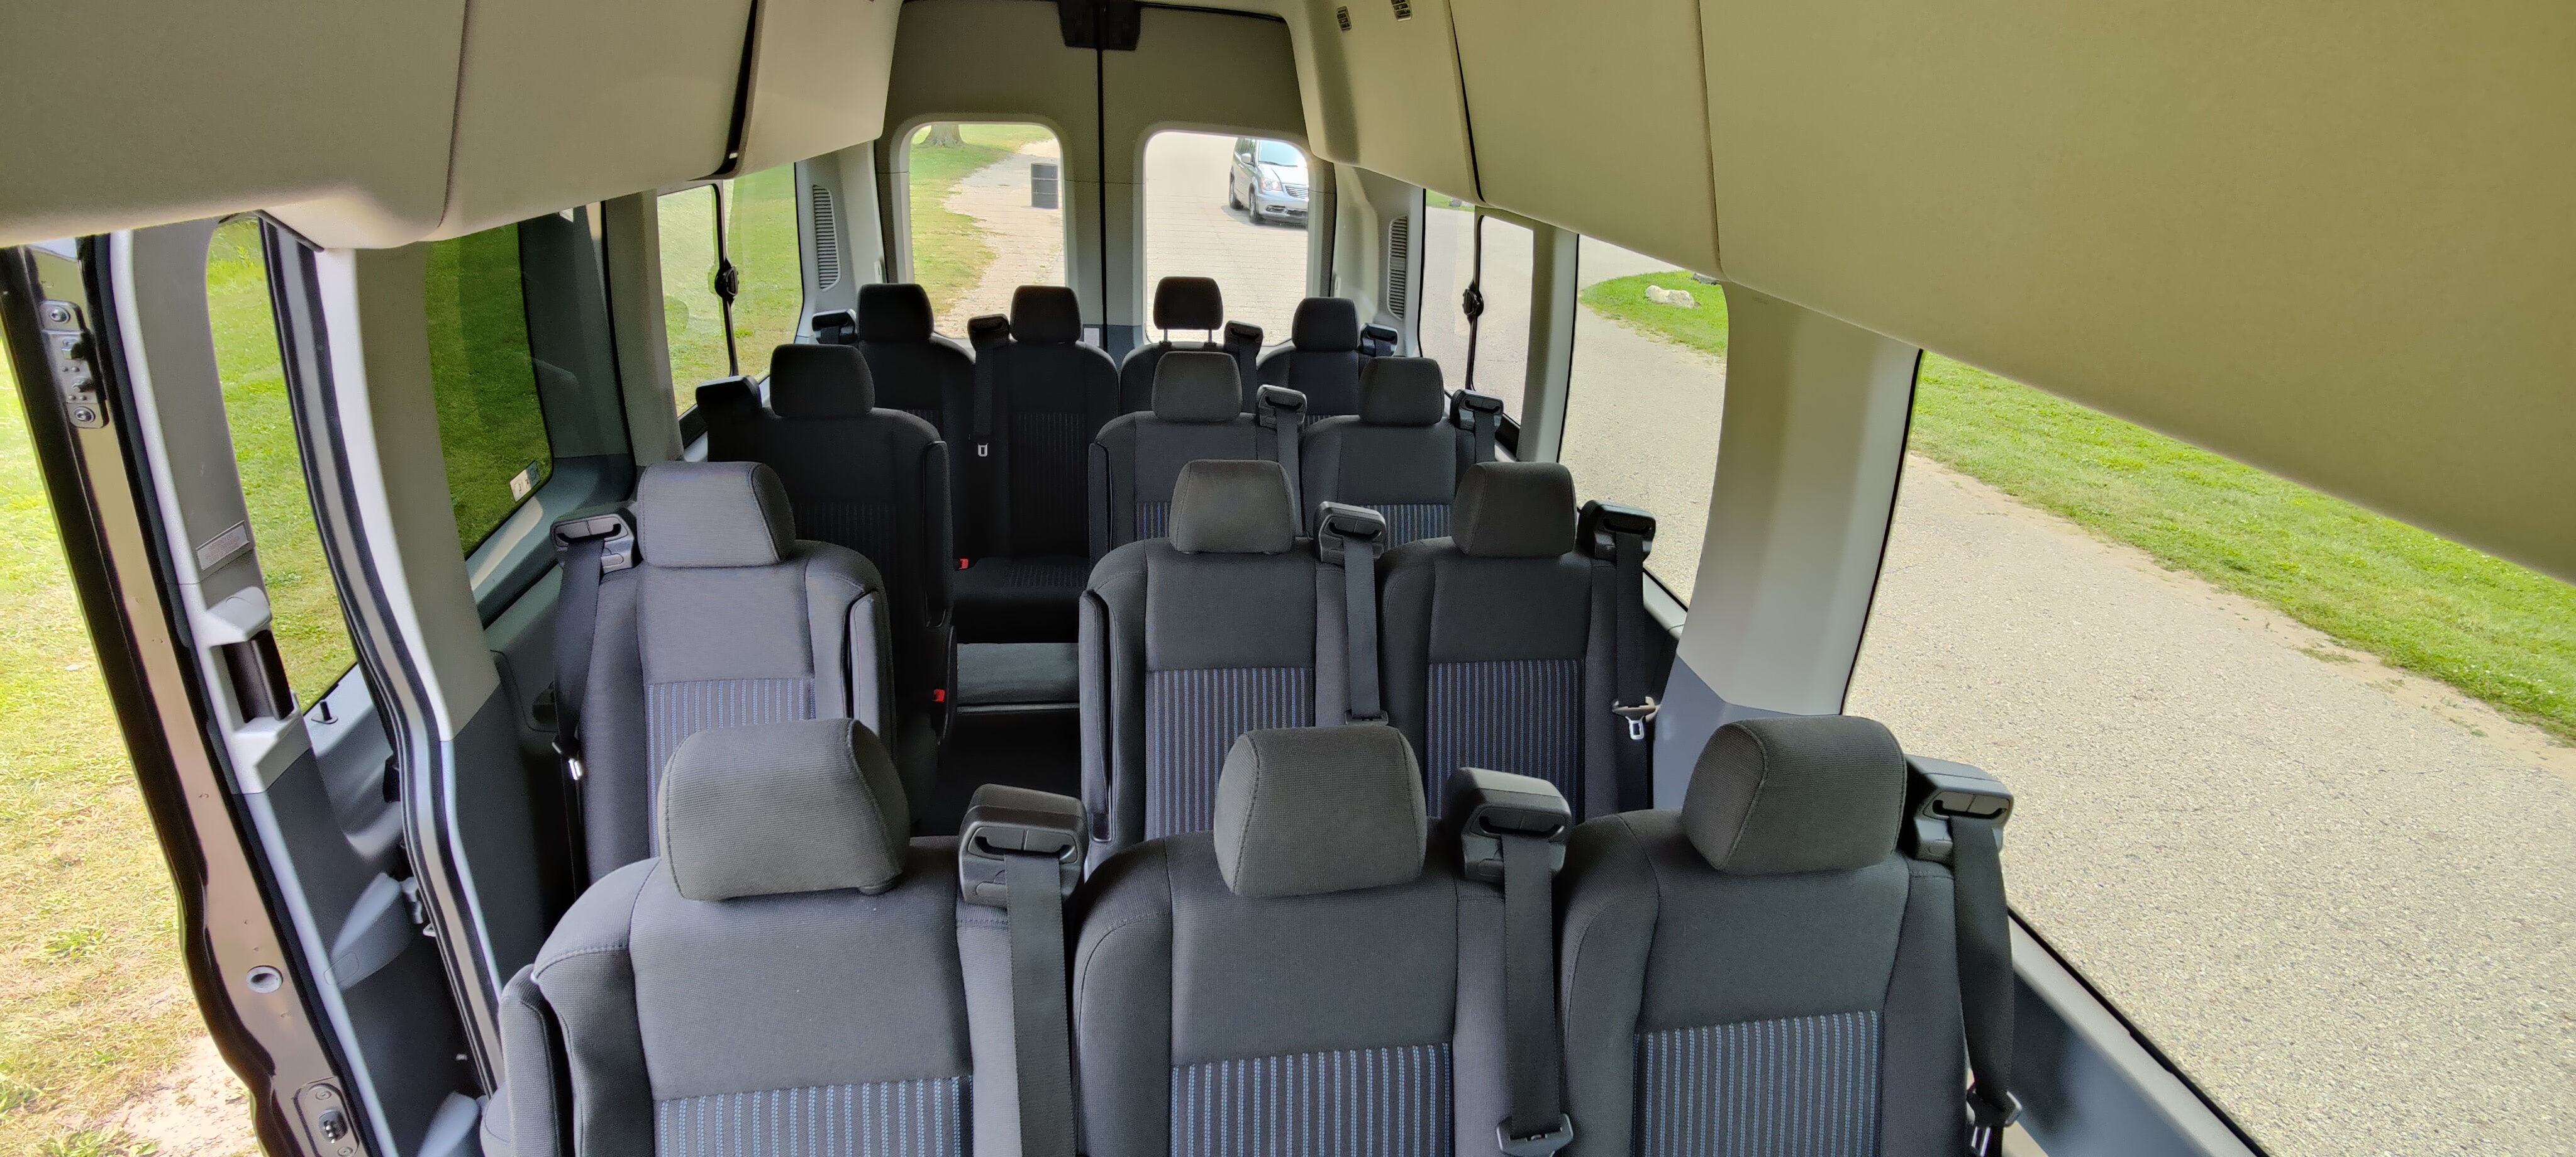 14 Passenger Executive Shuttle Bus Seating 3